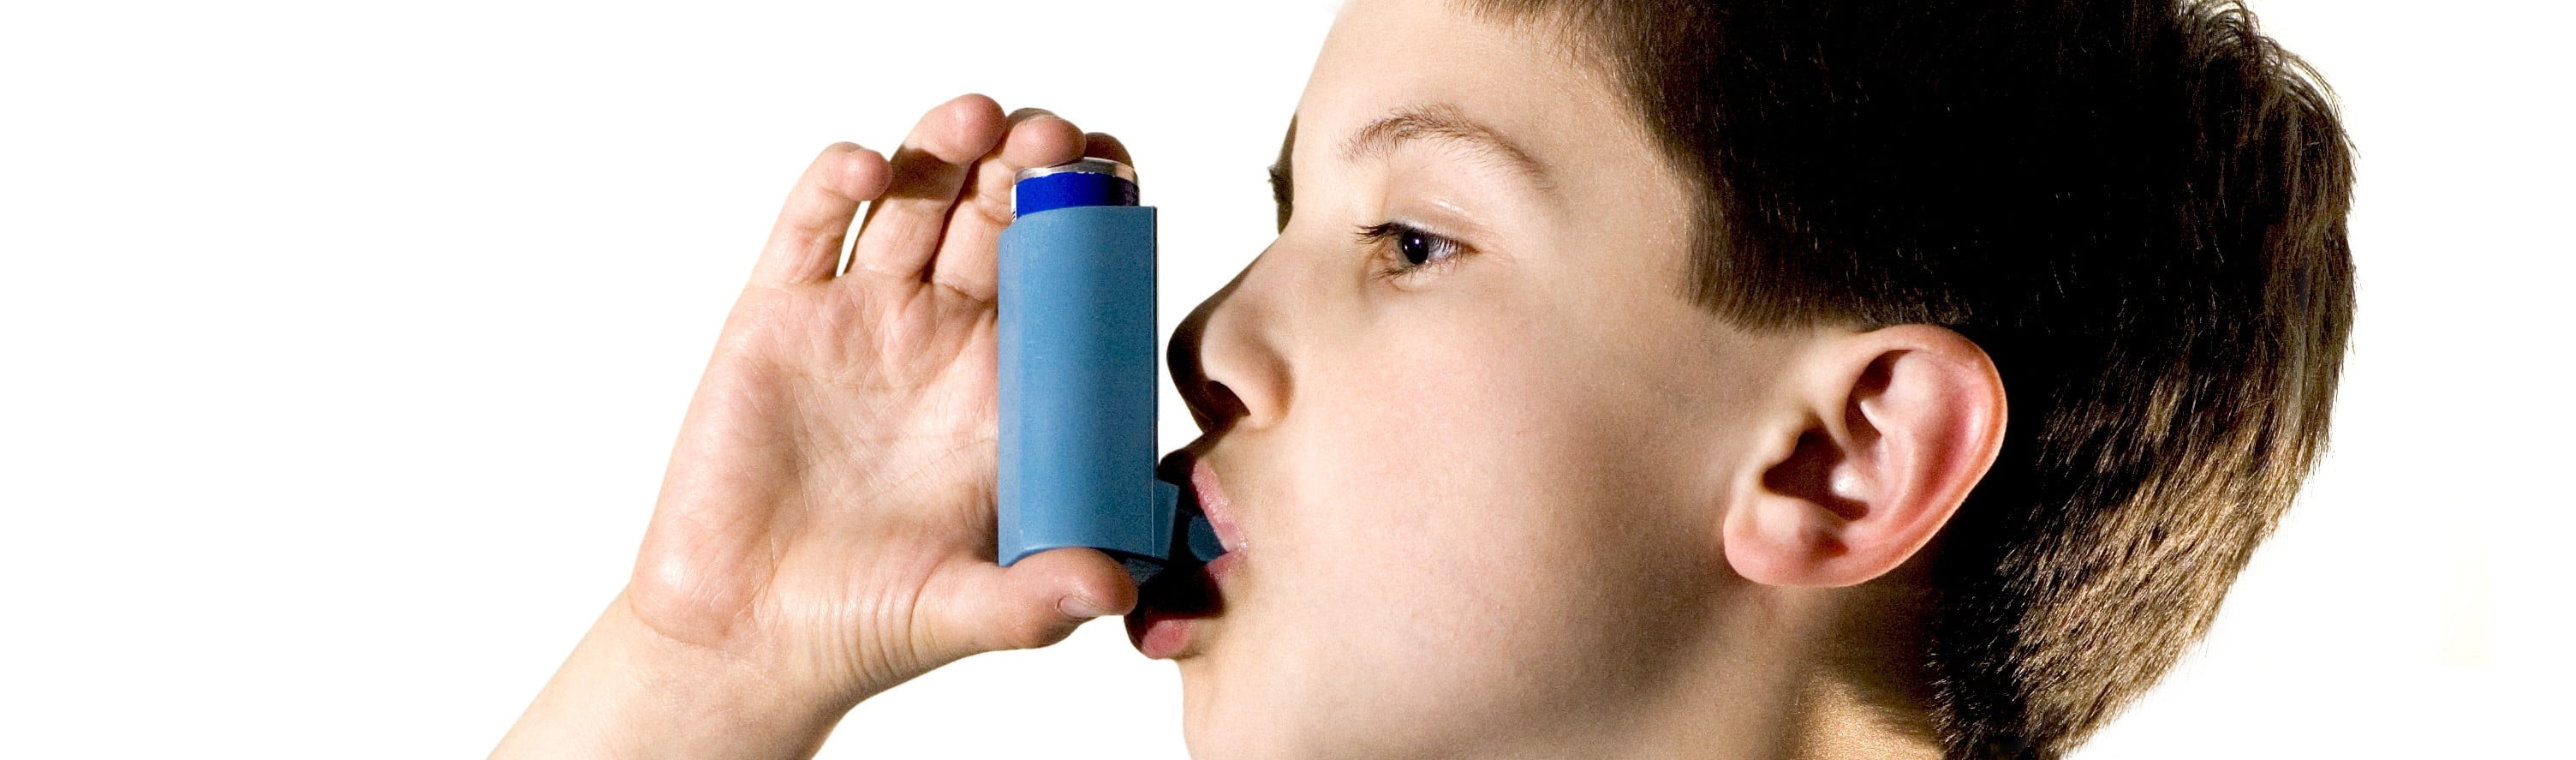 Asthma Boy 0000032415161 E1419280791948 مجلة نقطة العلمية